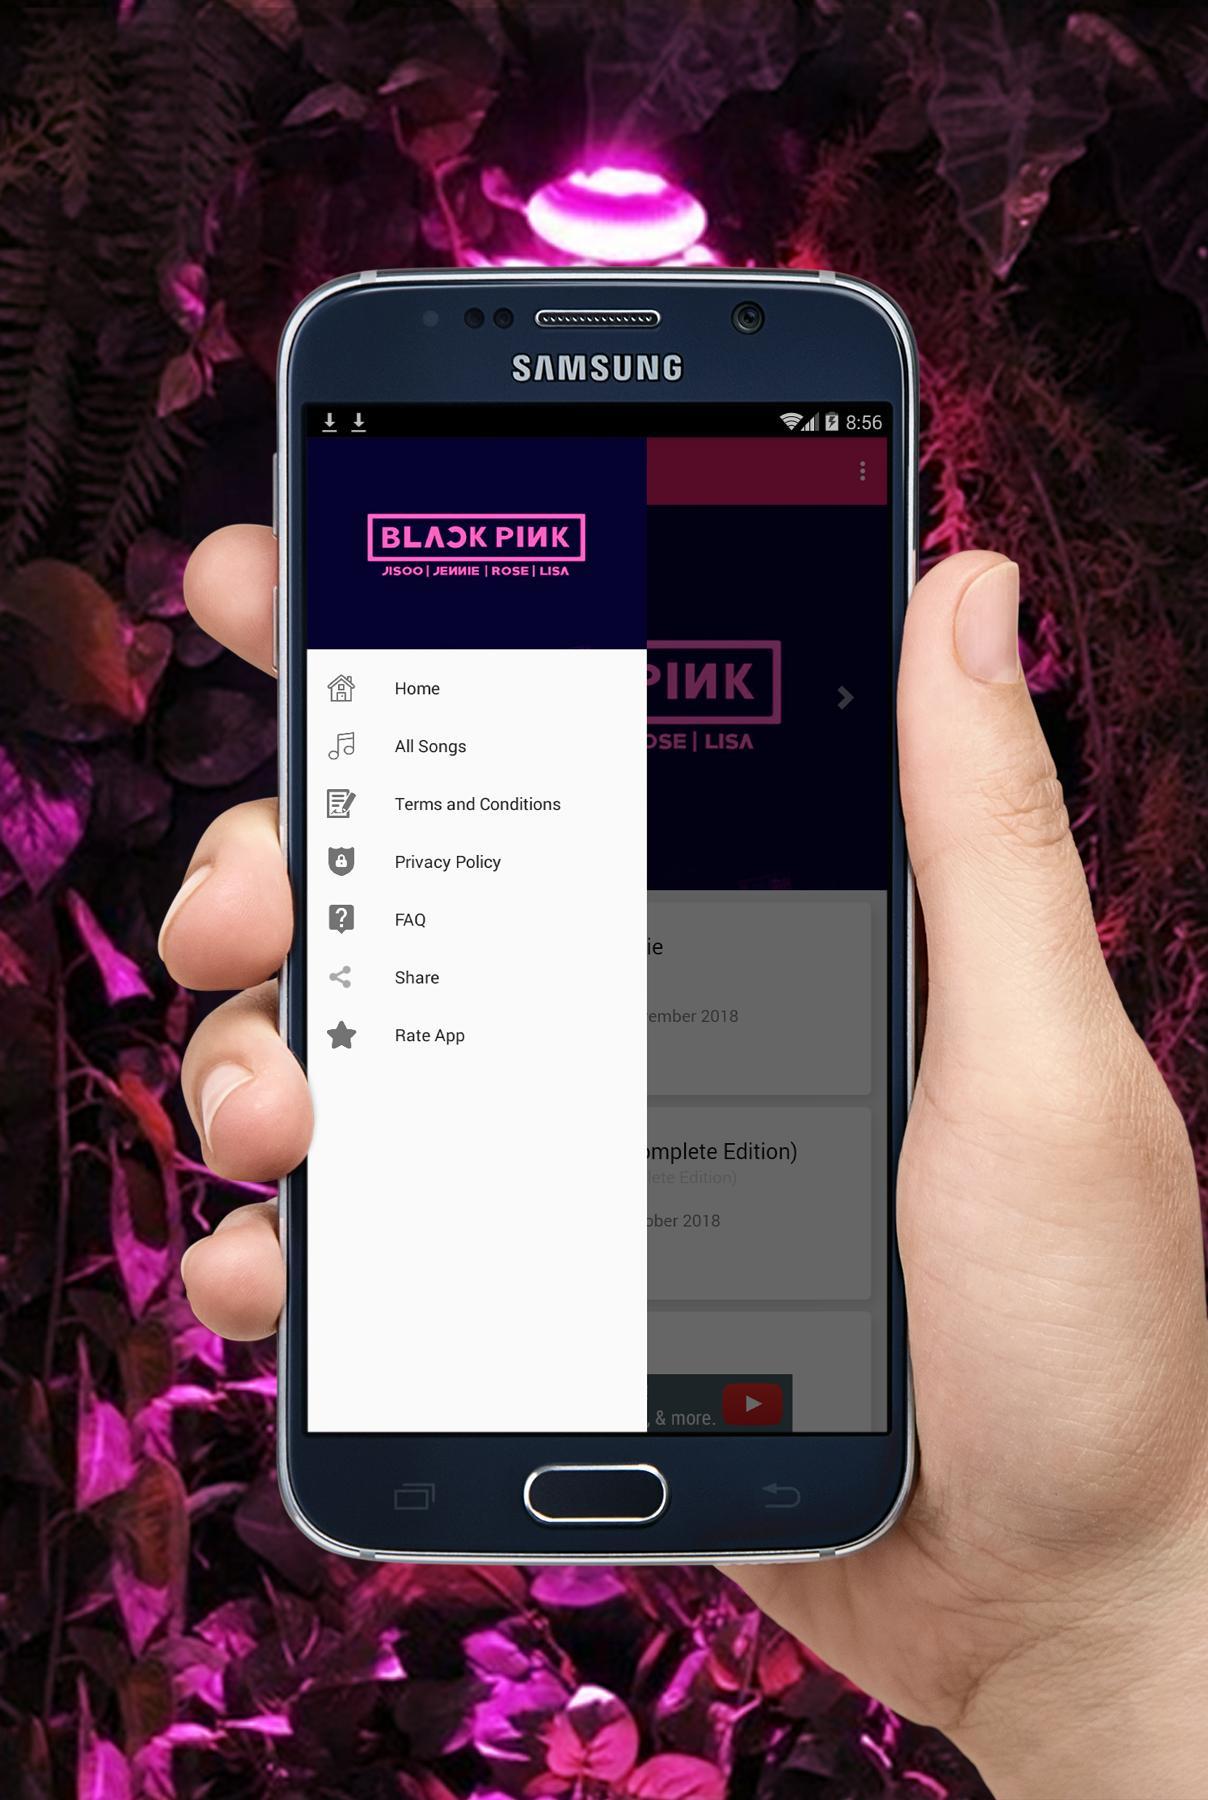 Blackpink Lyrics Kpop For Android Apk Download